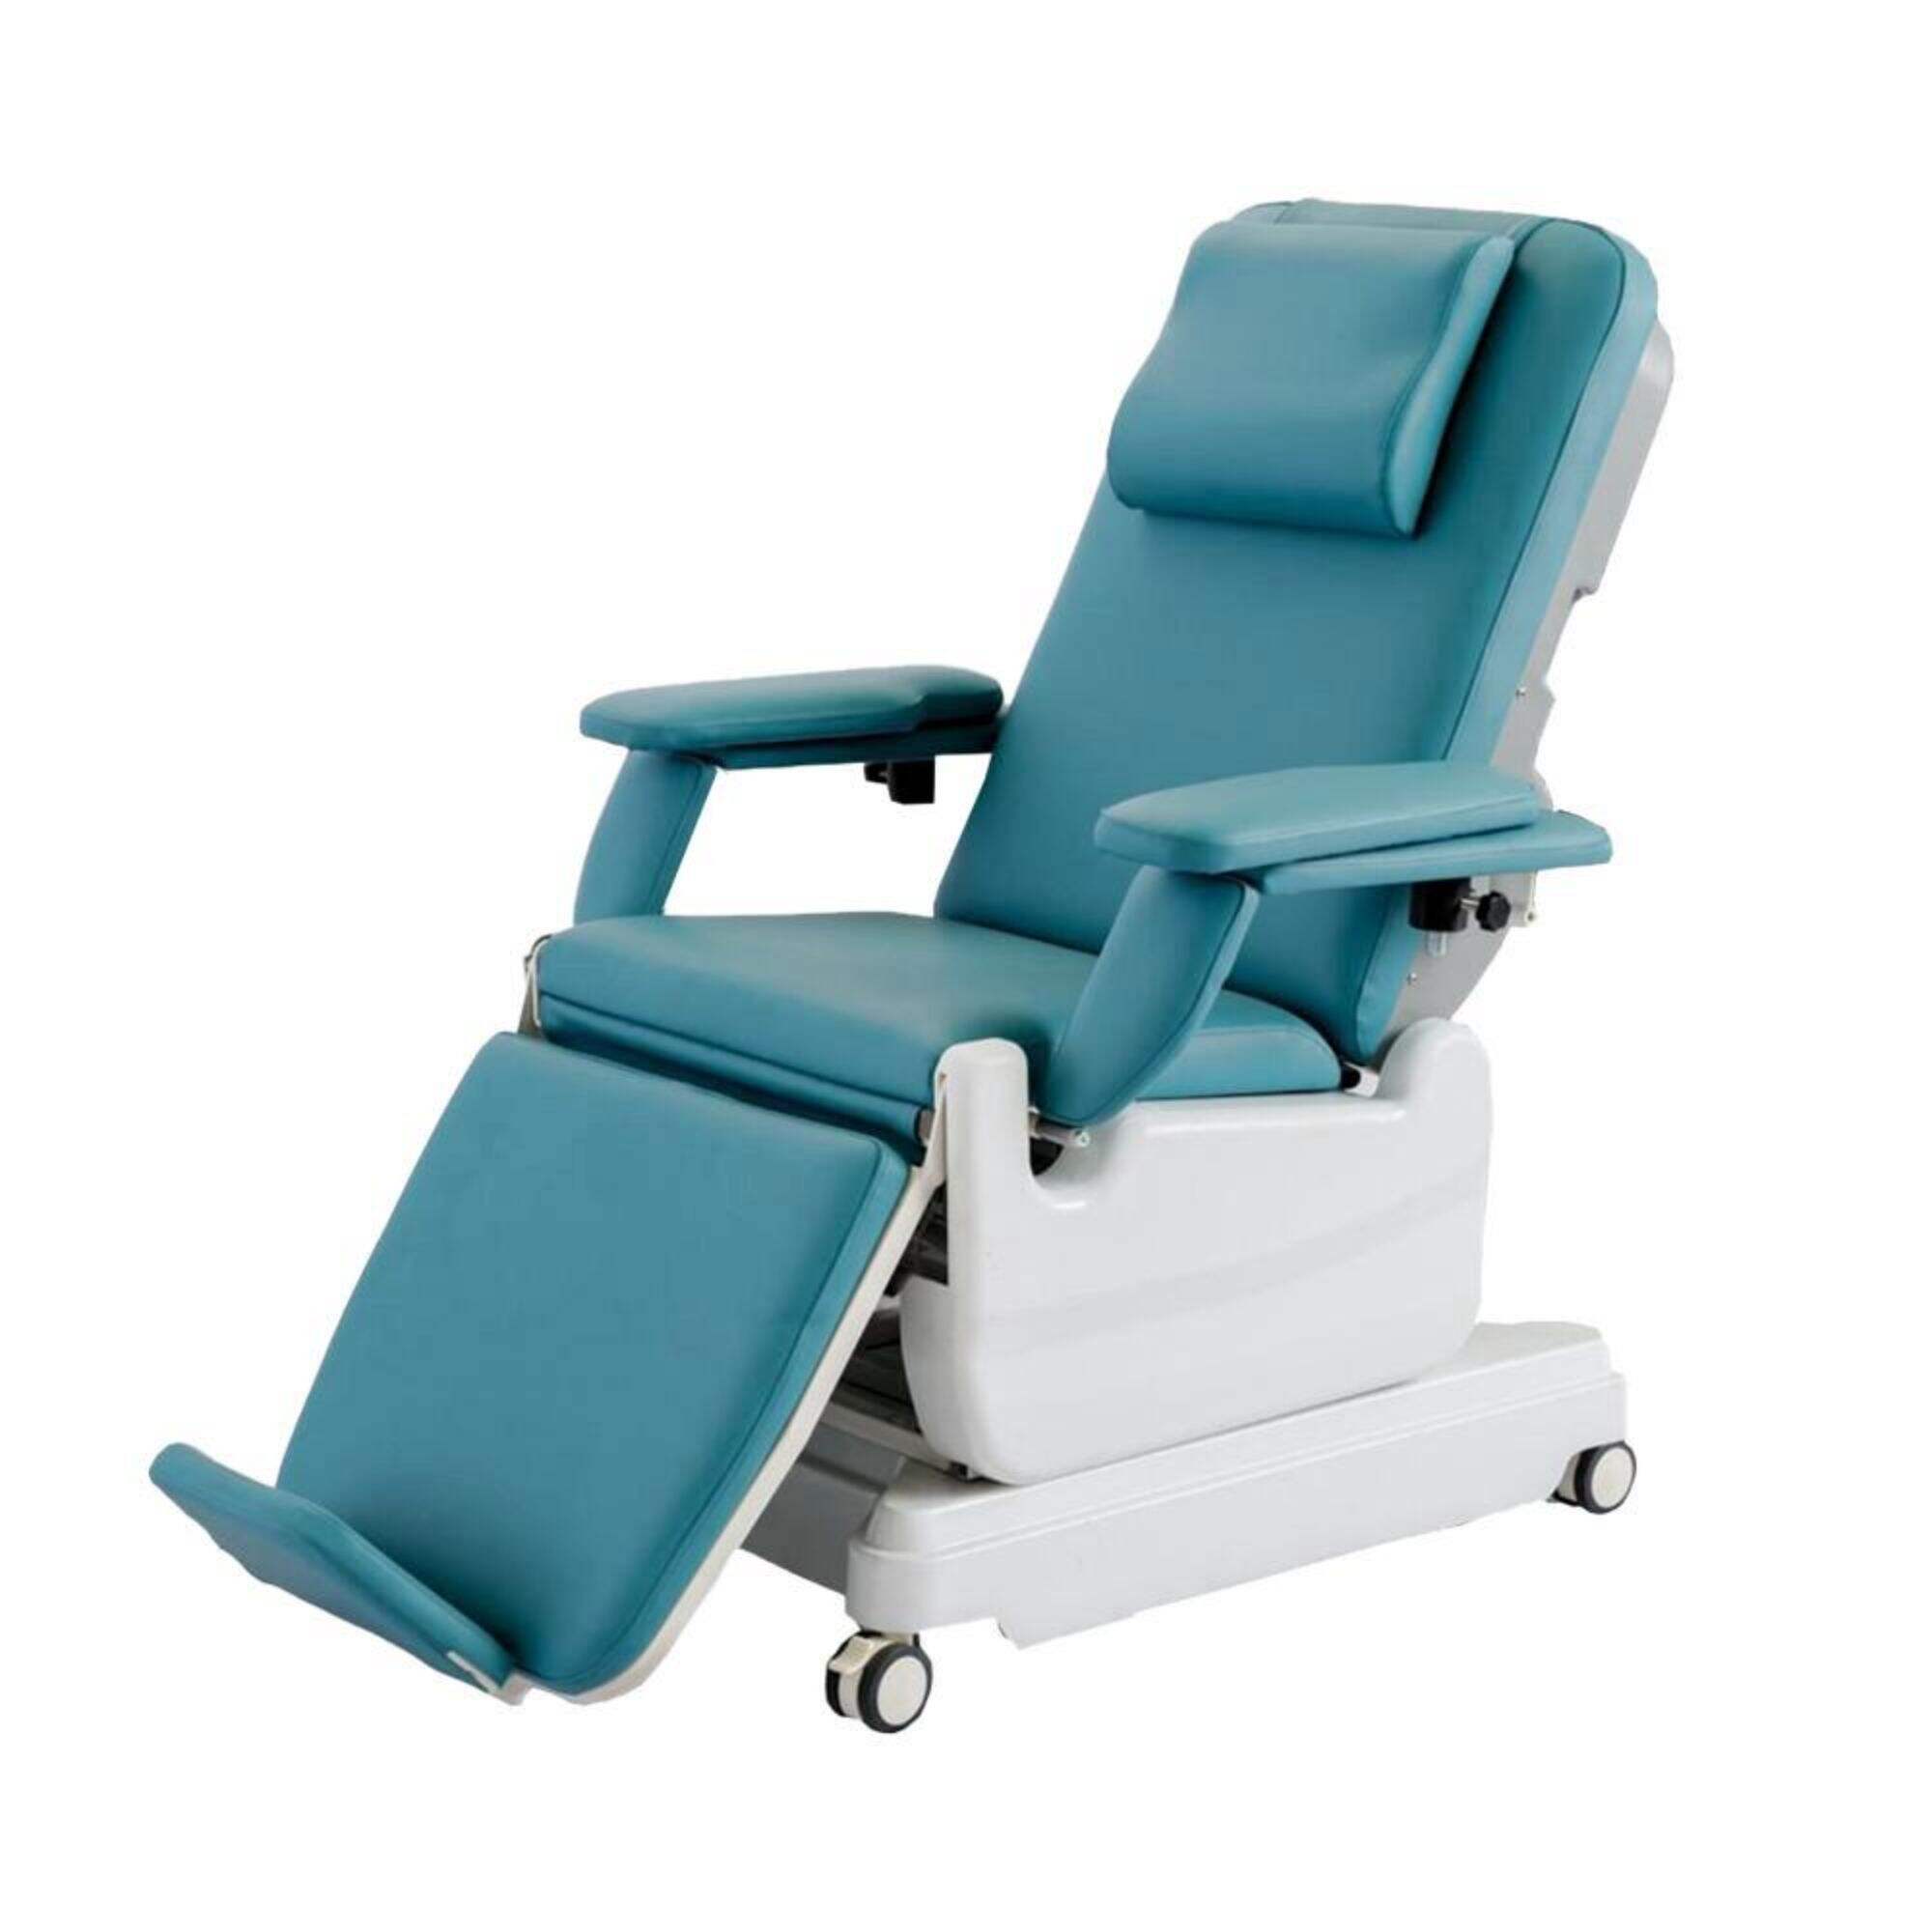 YFY-D05 Electric Dialysis Chair